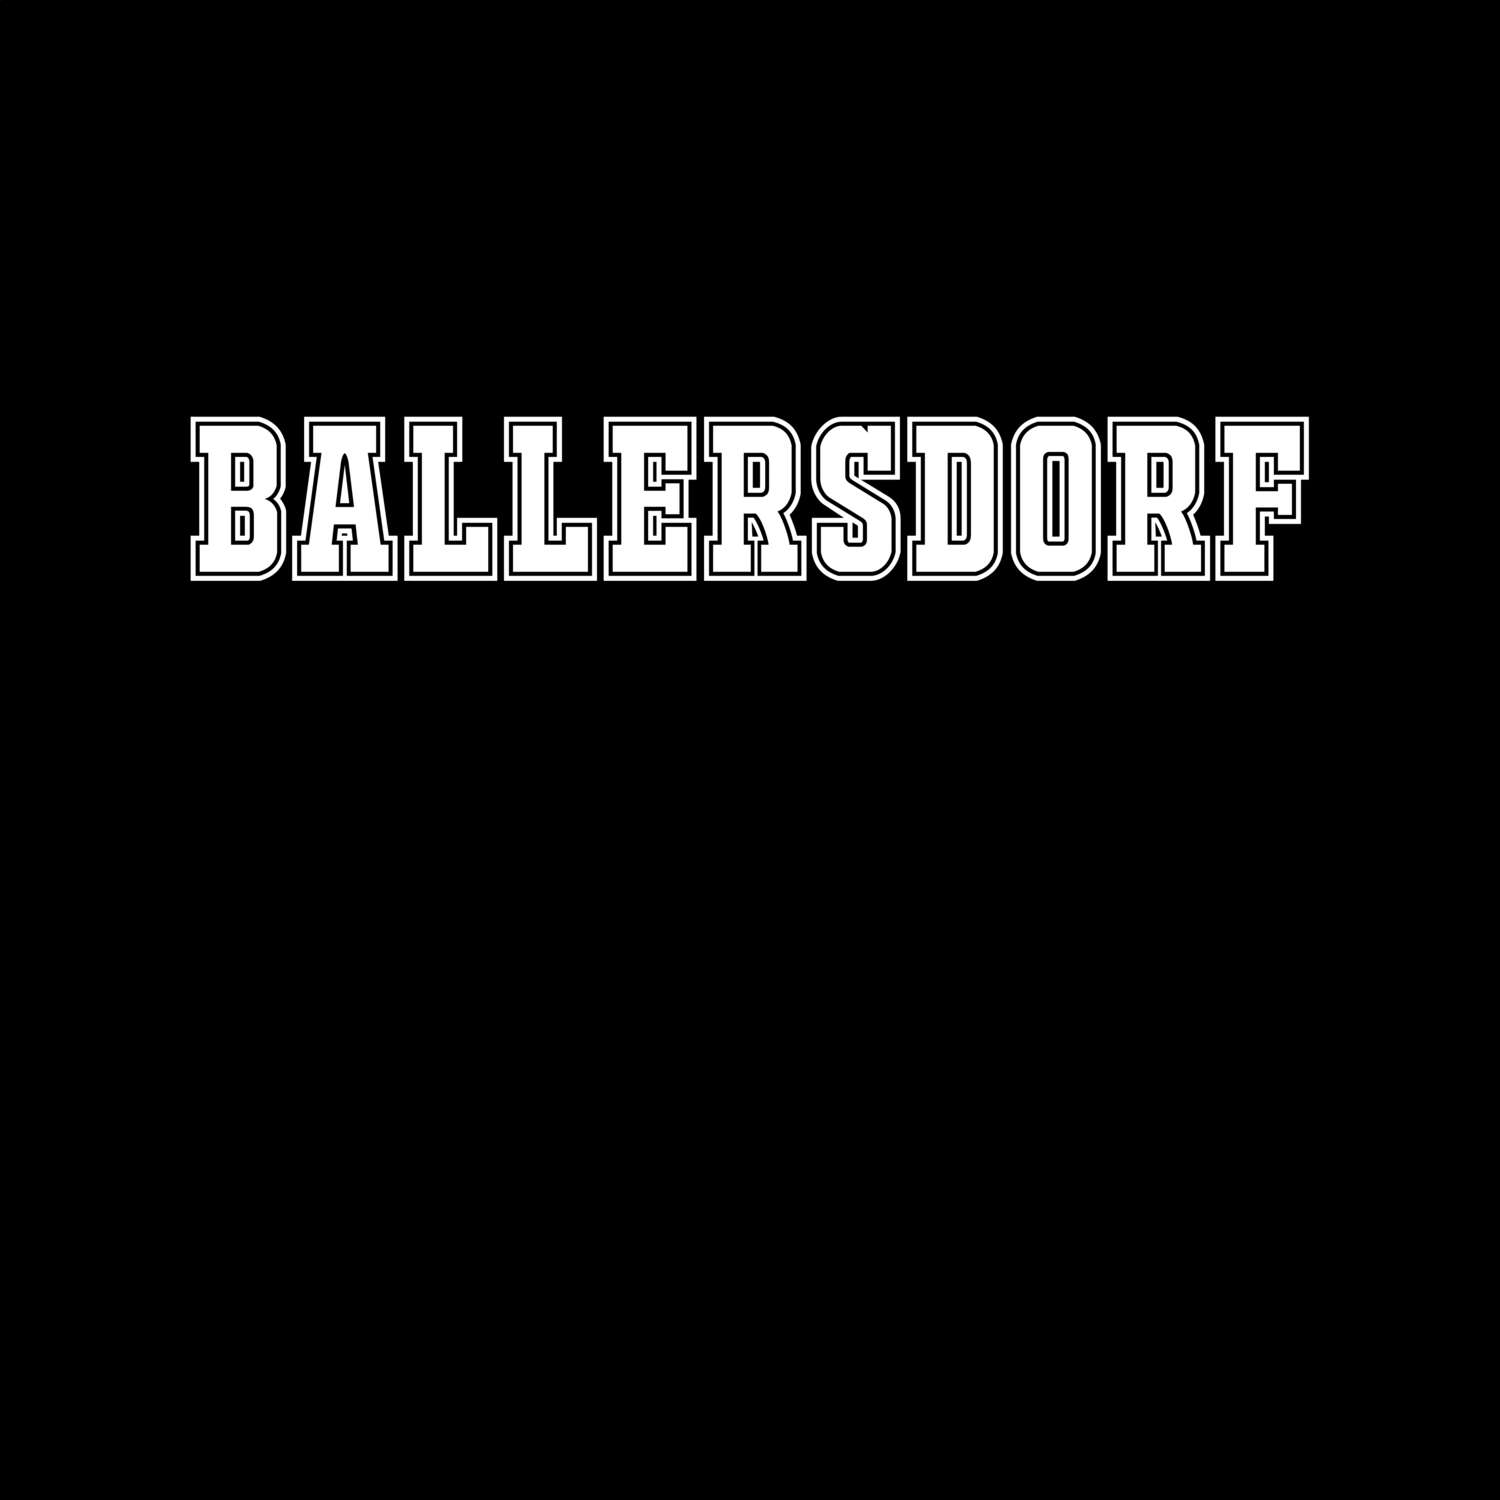 Ballersdorf T-Shirt »Classic«